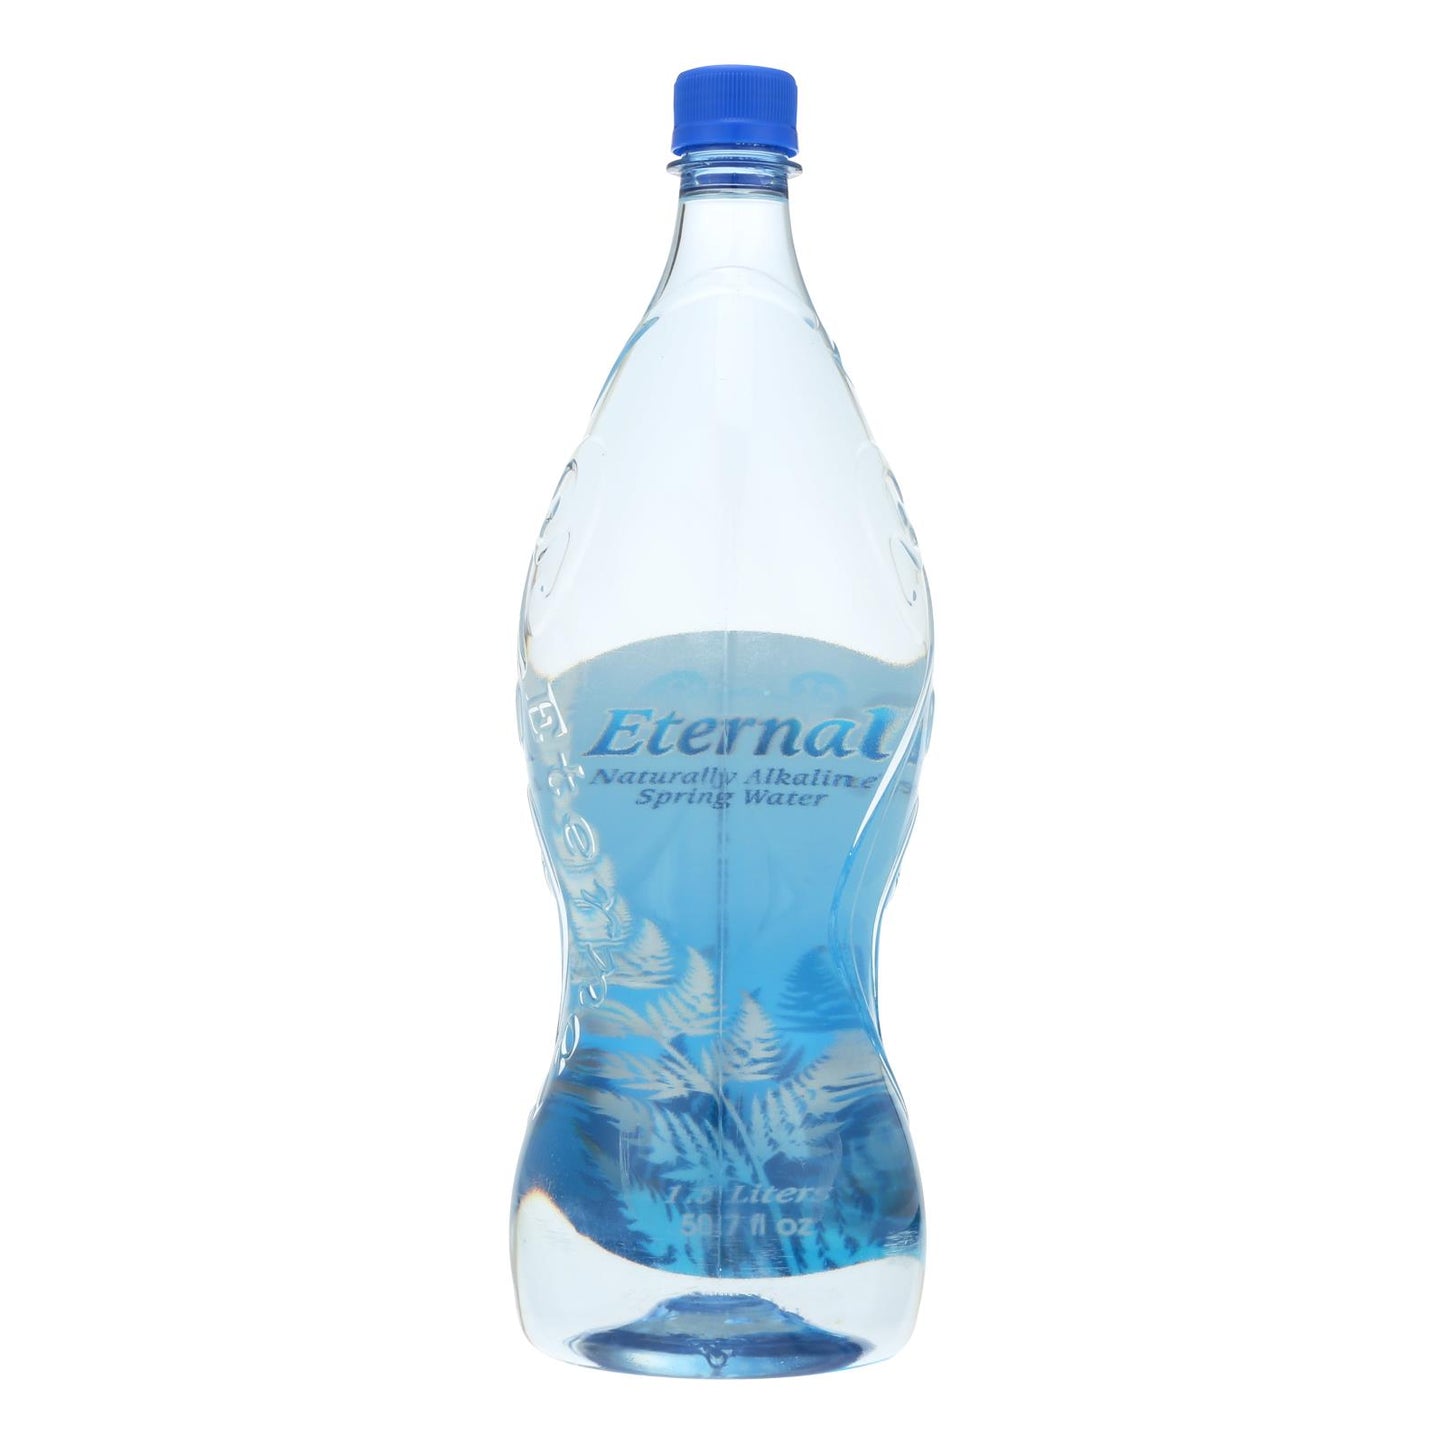 Eternal Naturally Artesion Water - Case Of 12 - 1.5 Liter